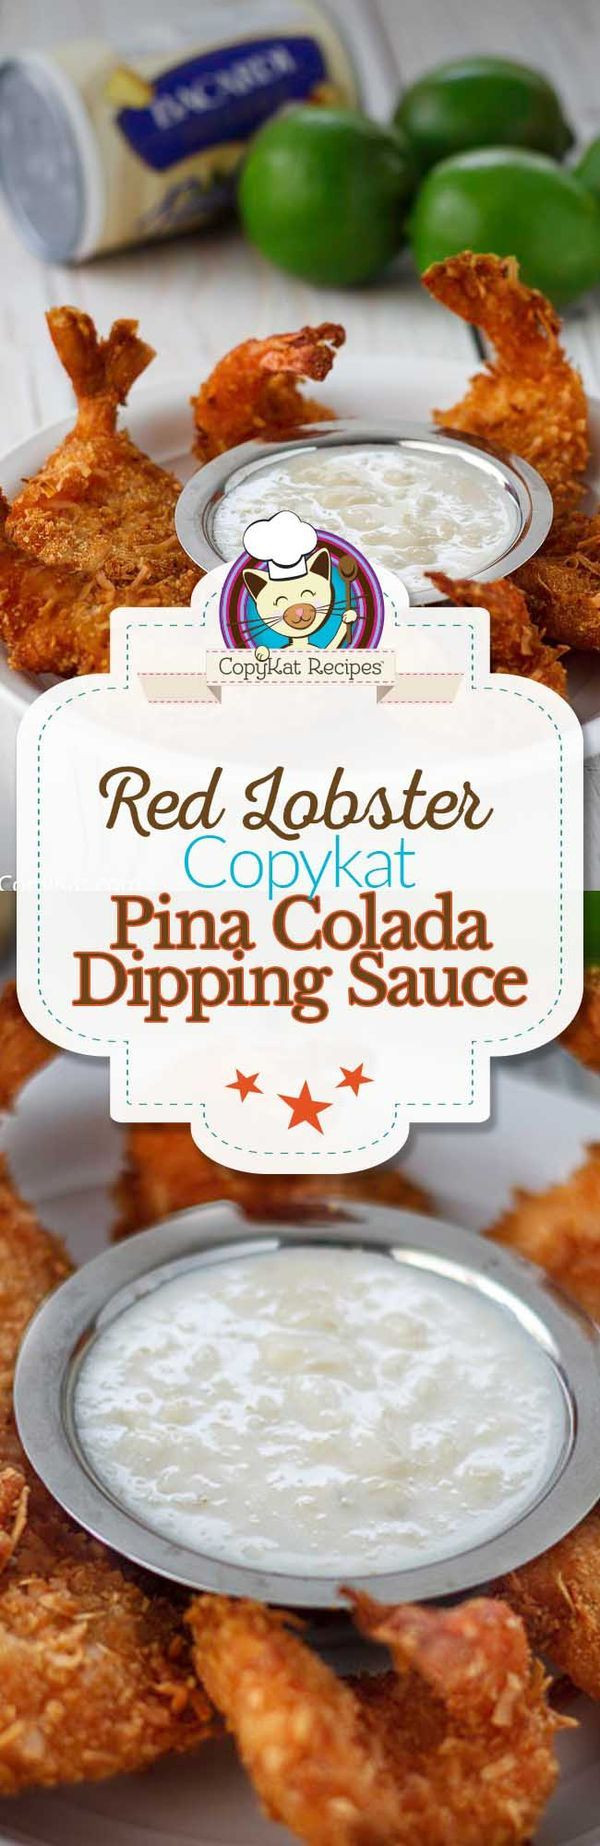 Red Lobster Coconut Shrimp Dip
 70 best images about recipes Red Lobster on Pinterest